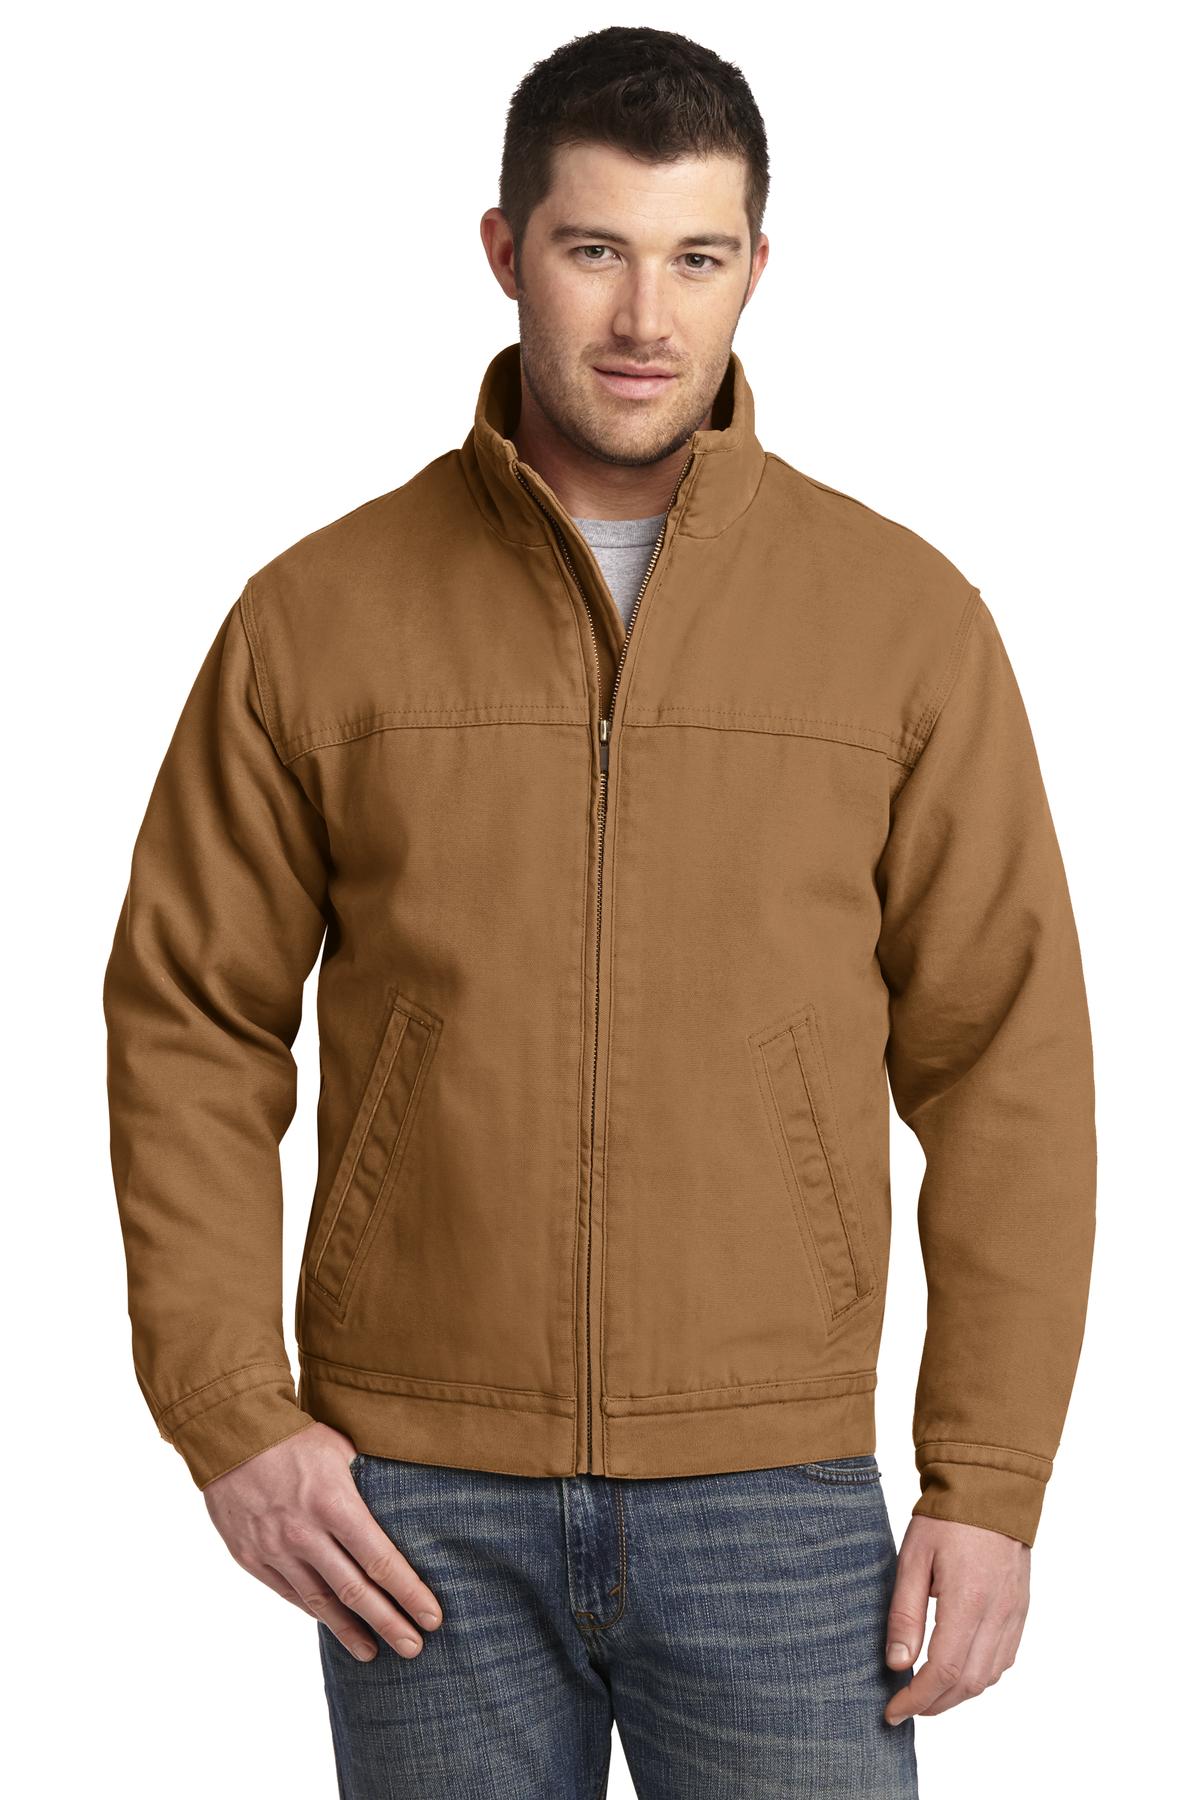 CornerStone® Washed Duck Cloth Flannel-Lined Work Jacket. CSJ40 - DFW Impression